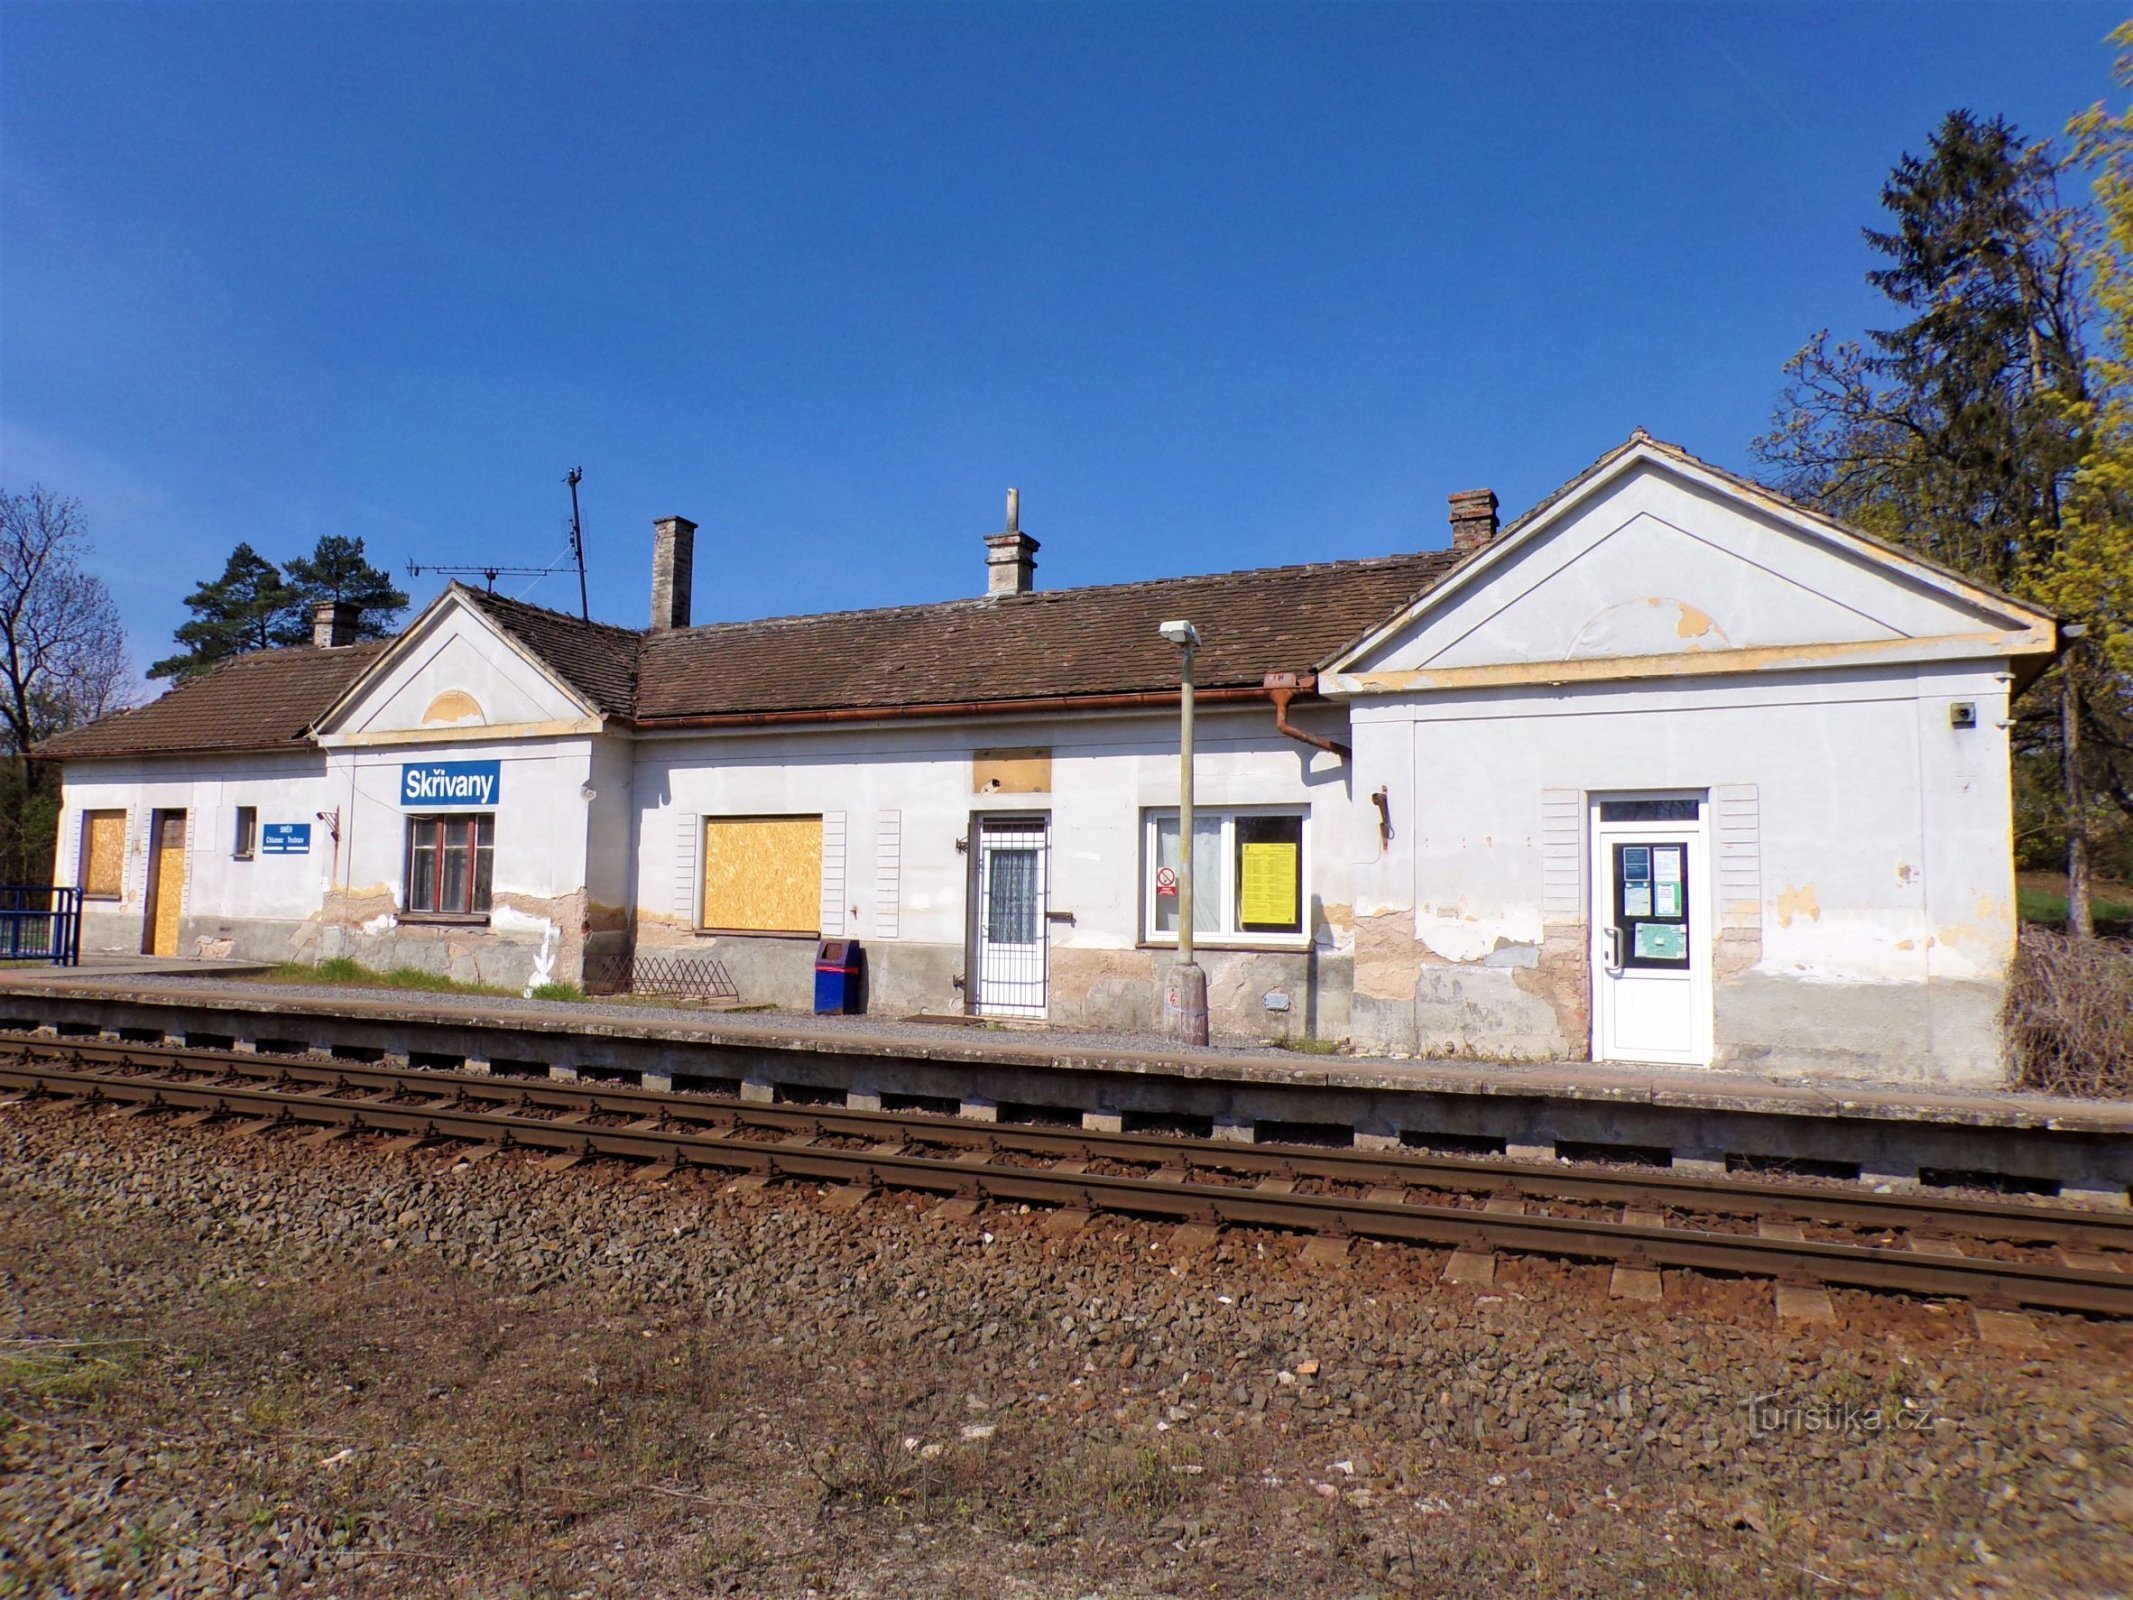 Stazione ferroviaria (Skrivany, 30.4.2021/XNUMX/XNUMX)